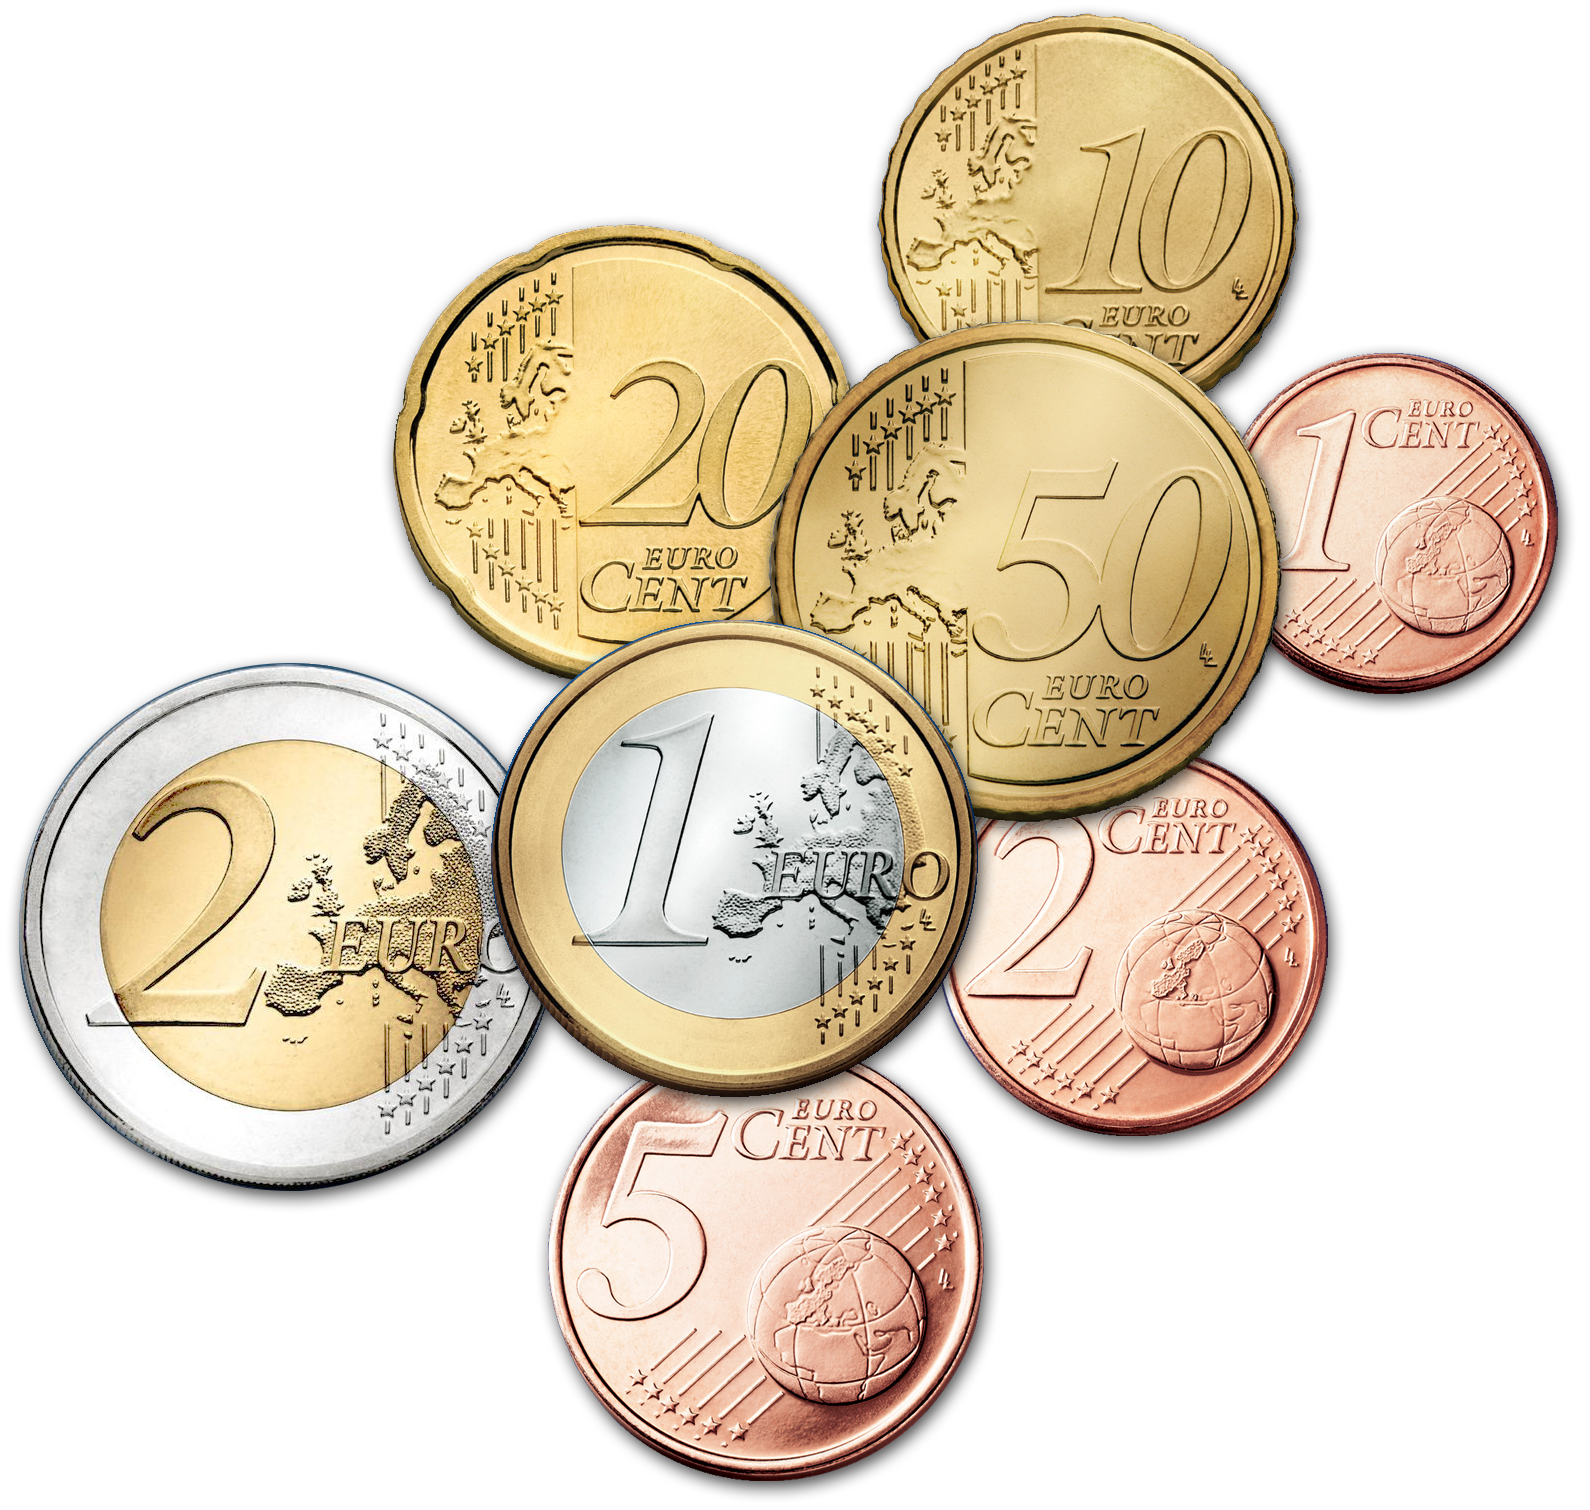 Euro currency. Монеты евро. Евро валюта. Евро купюры и монеты. Европейские деньги монеты.